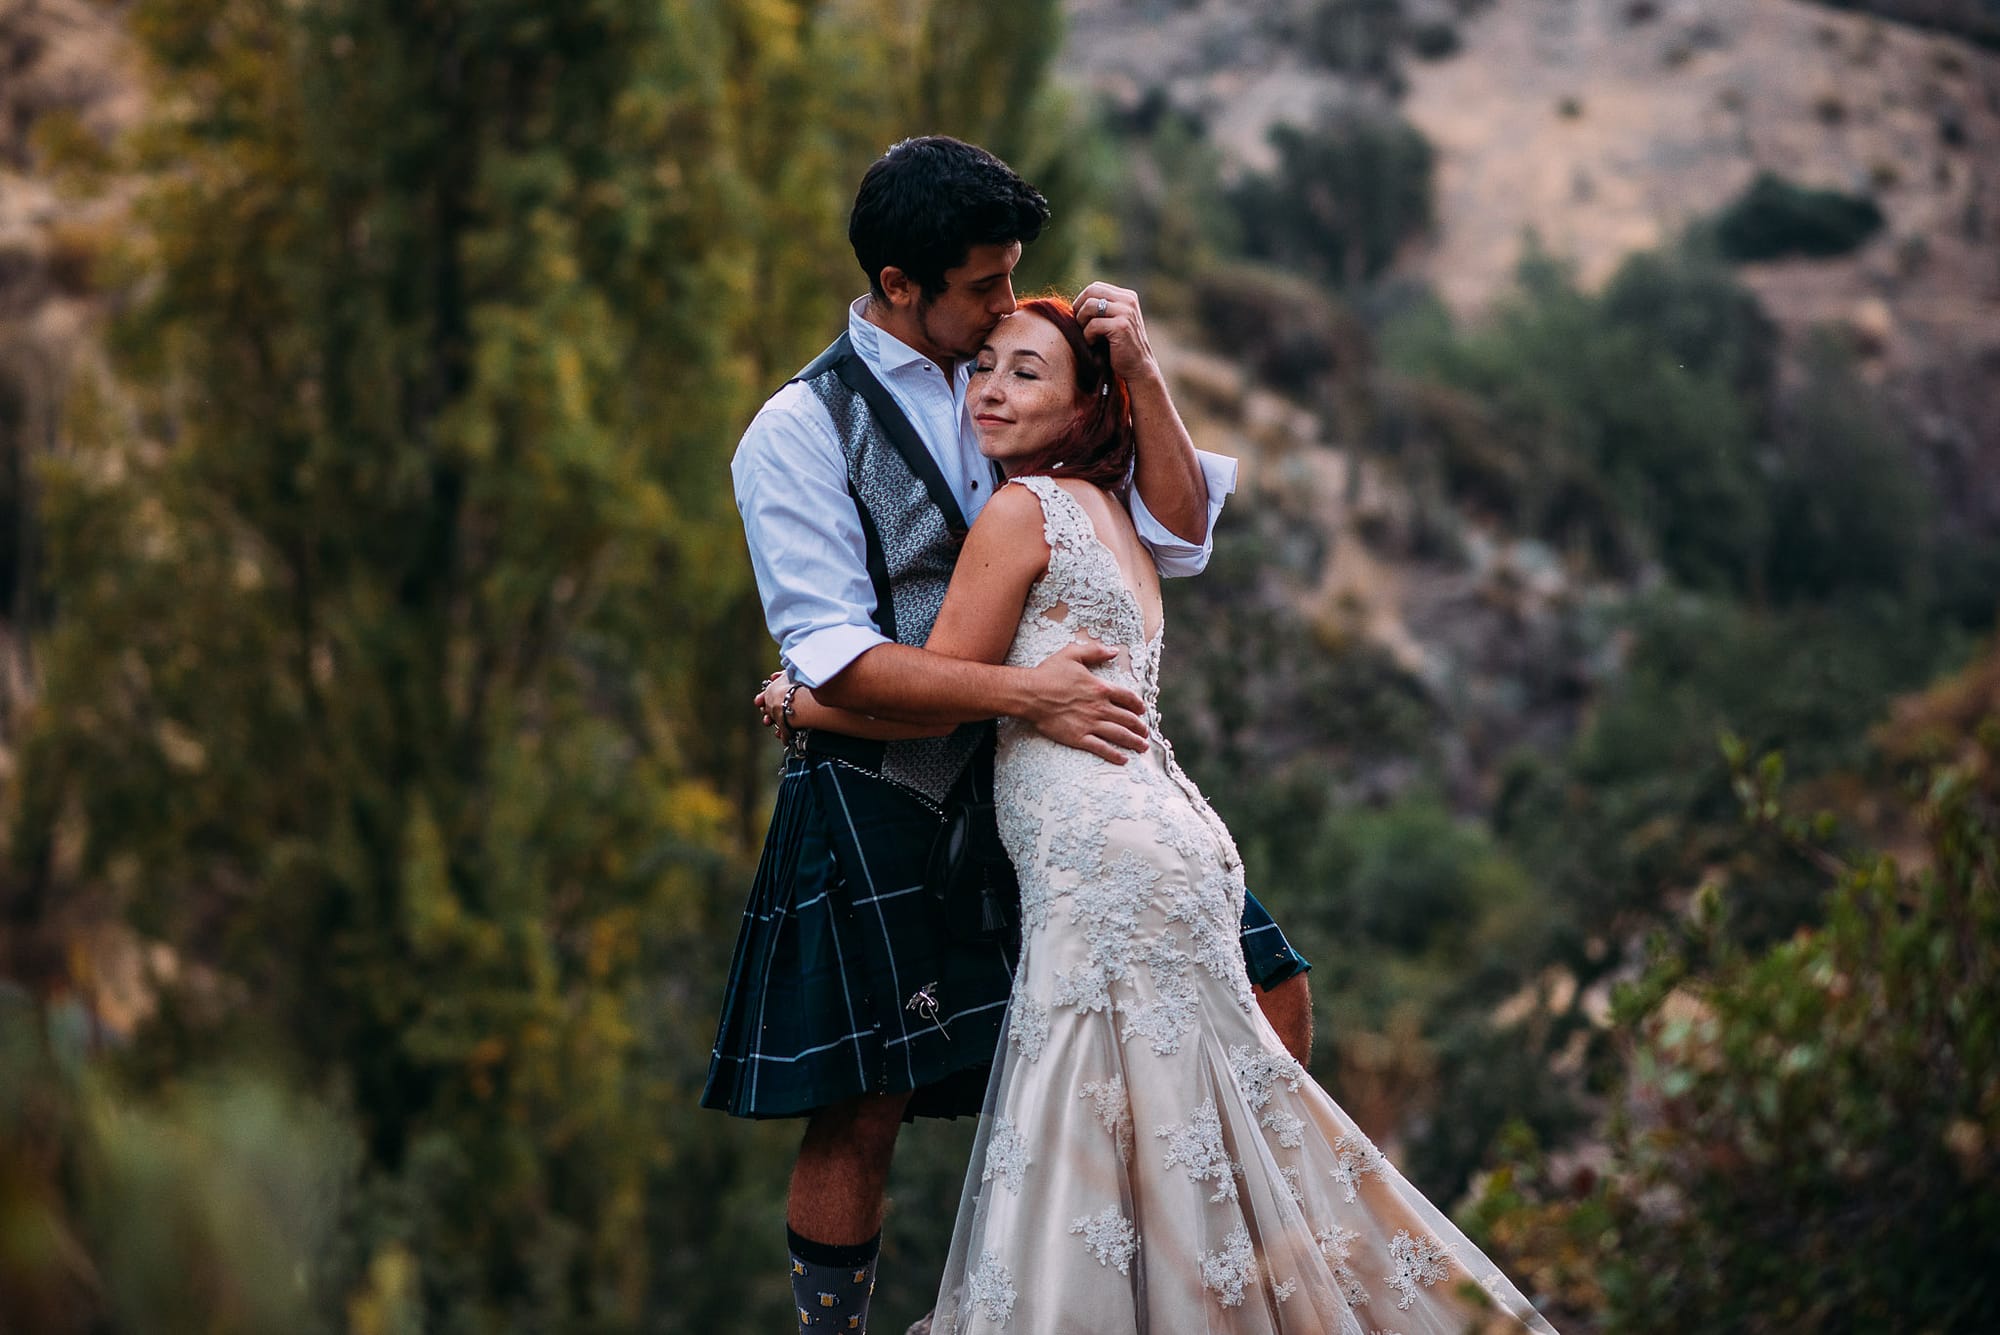 santuario de la naturaleza el arrayan-escalada-fotografo de matrimonios santiago